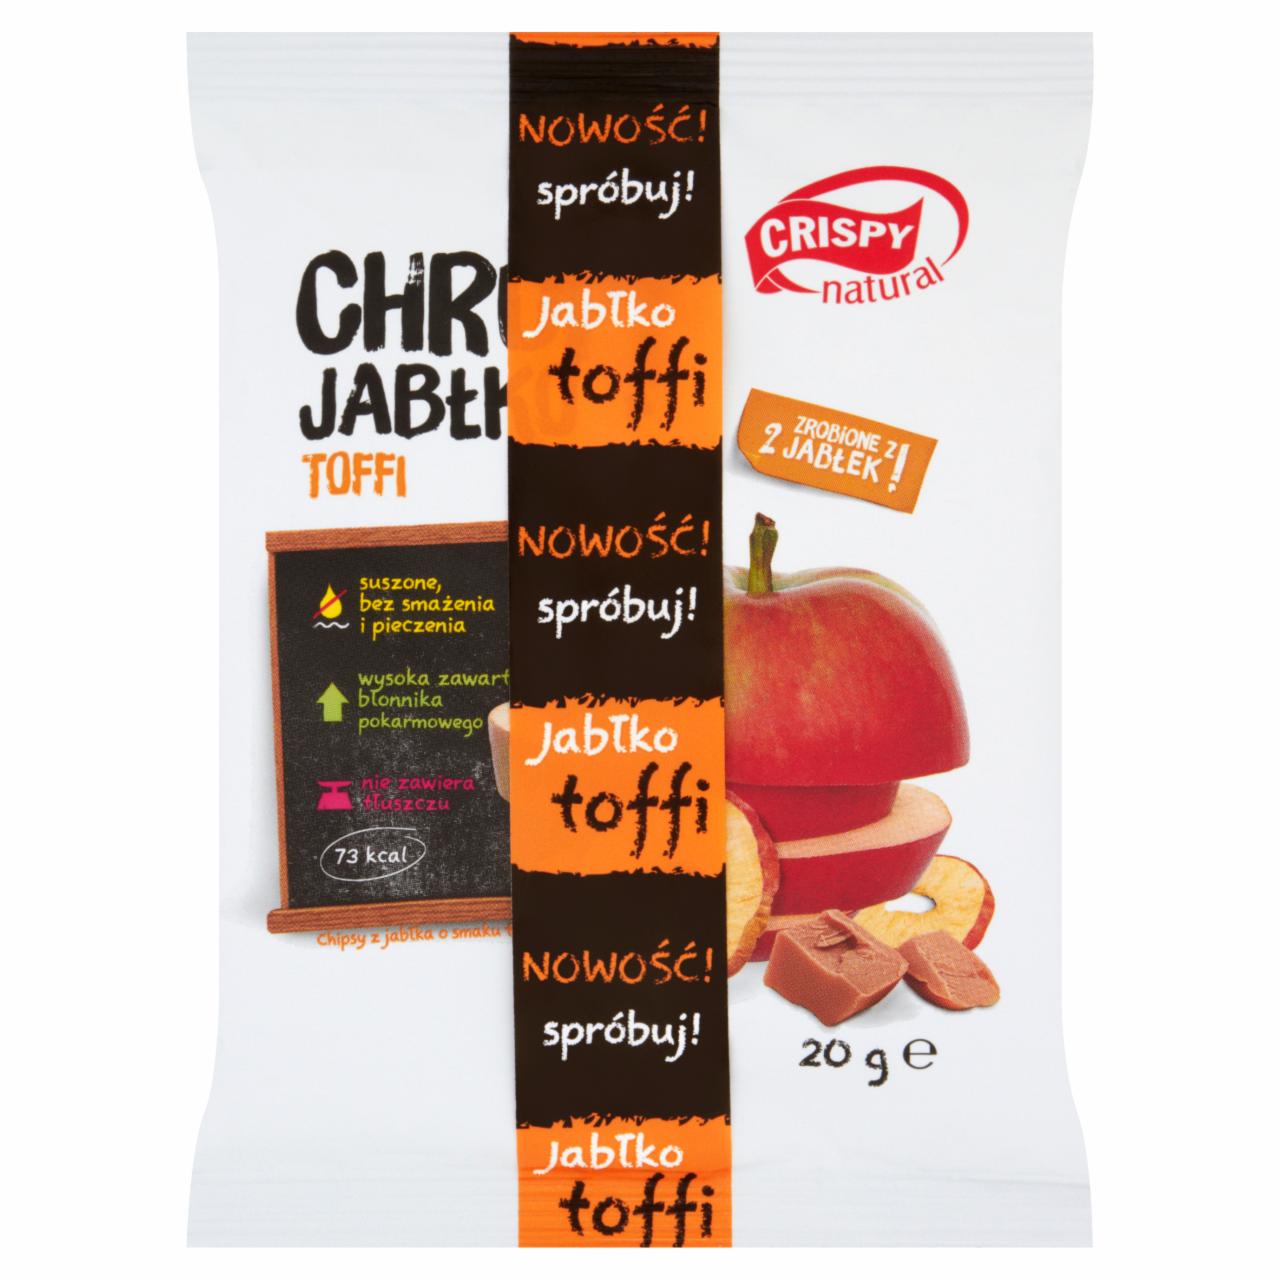 Zdjęcia - Crispy Natural Chrup Jabłko Toffi! Chipsy 20 g